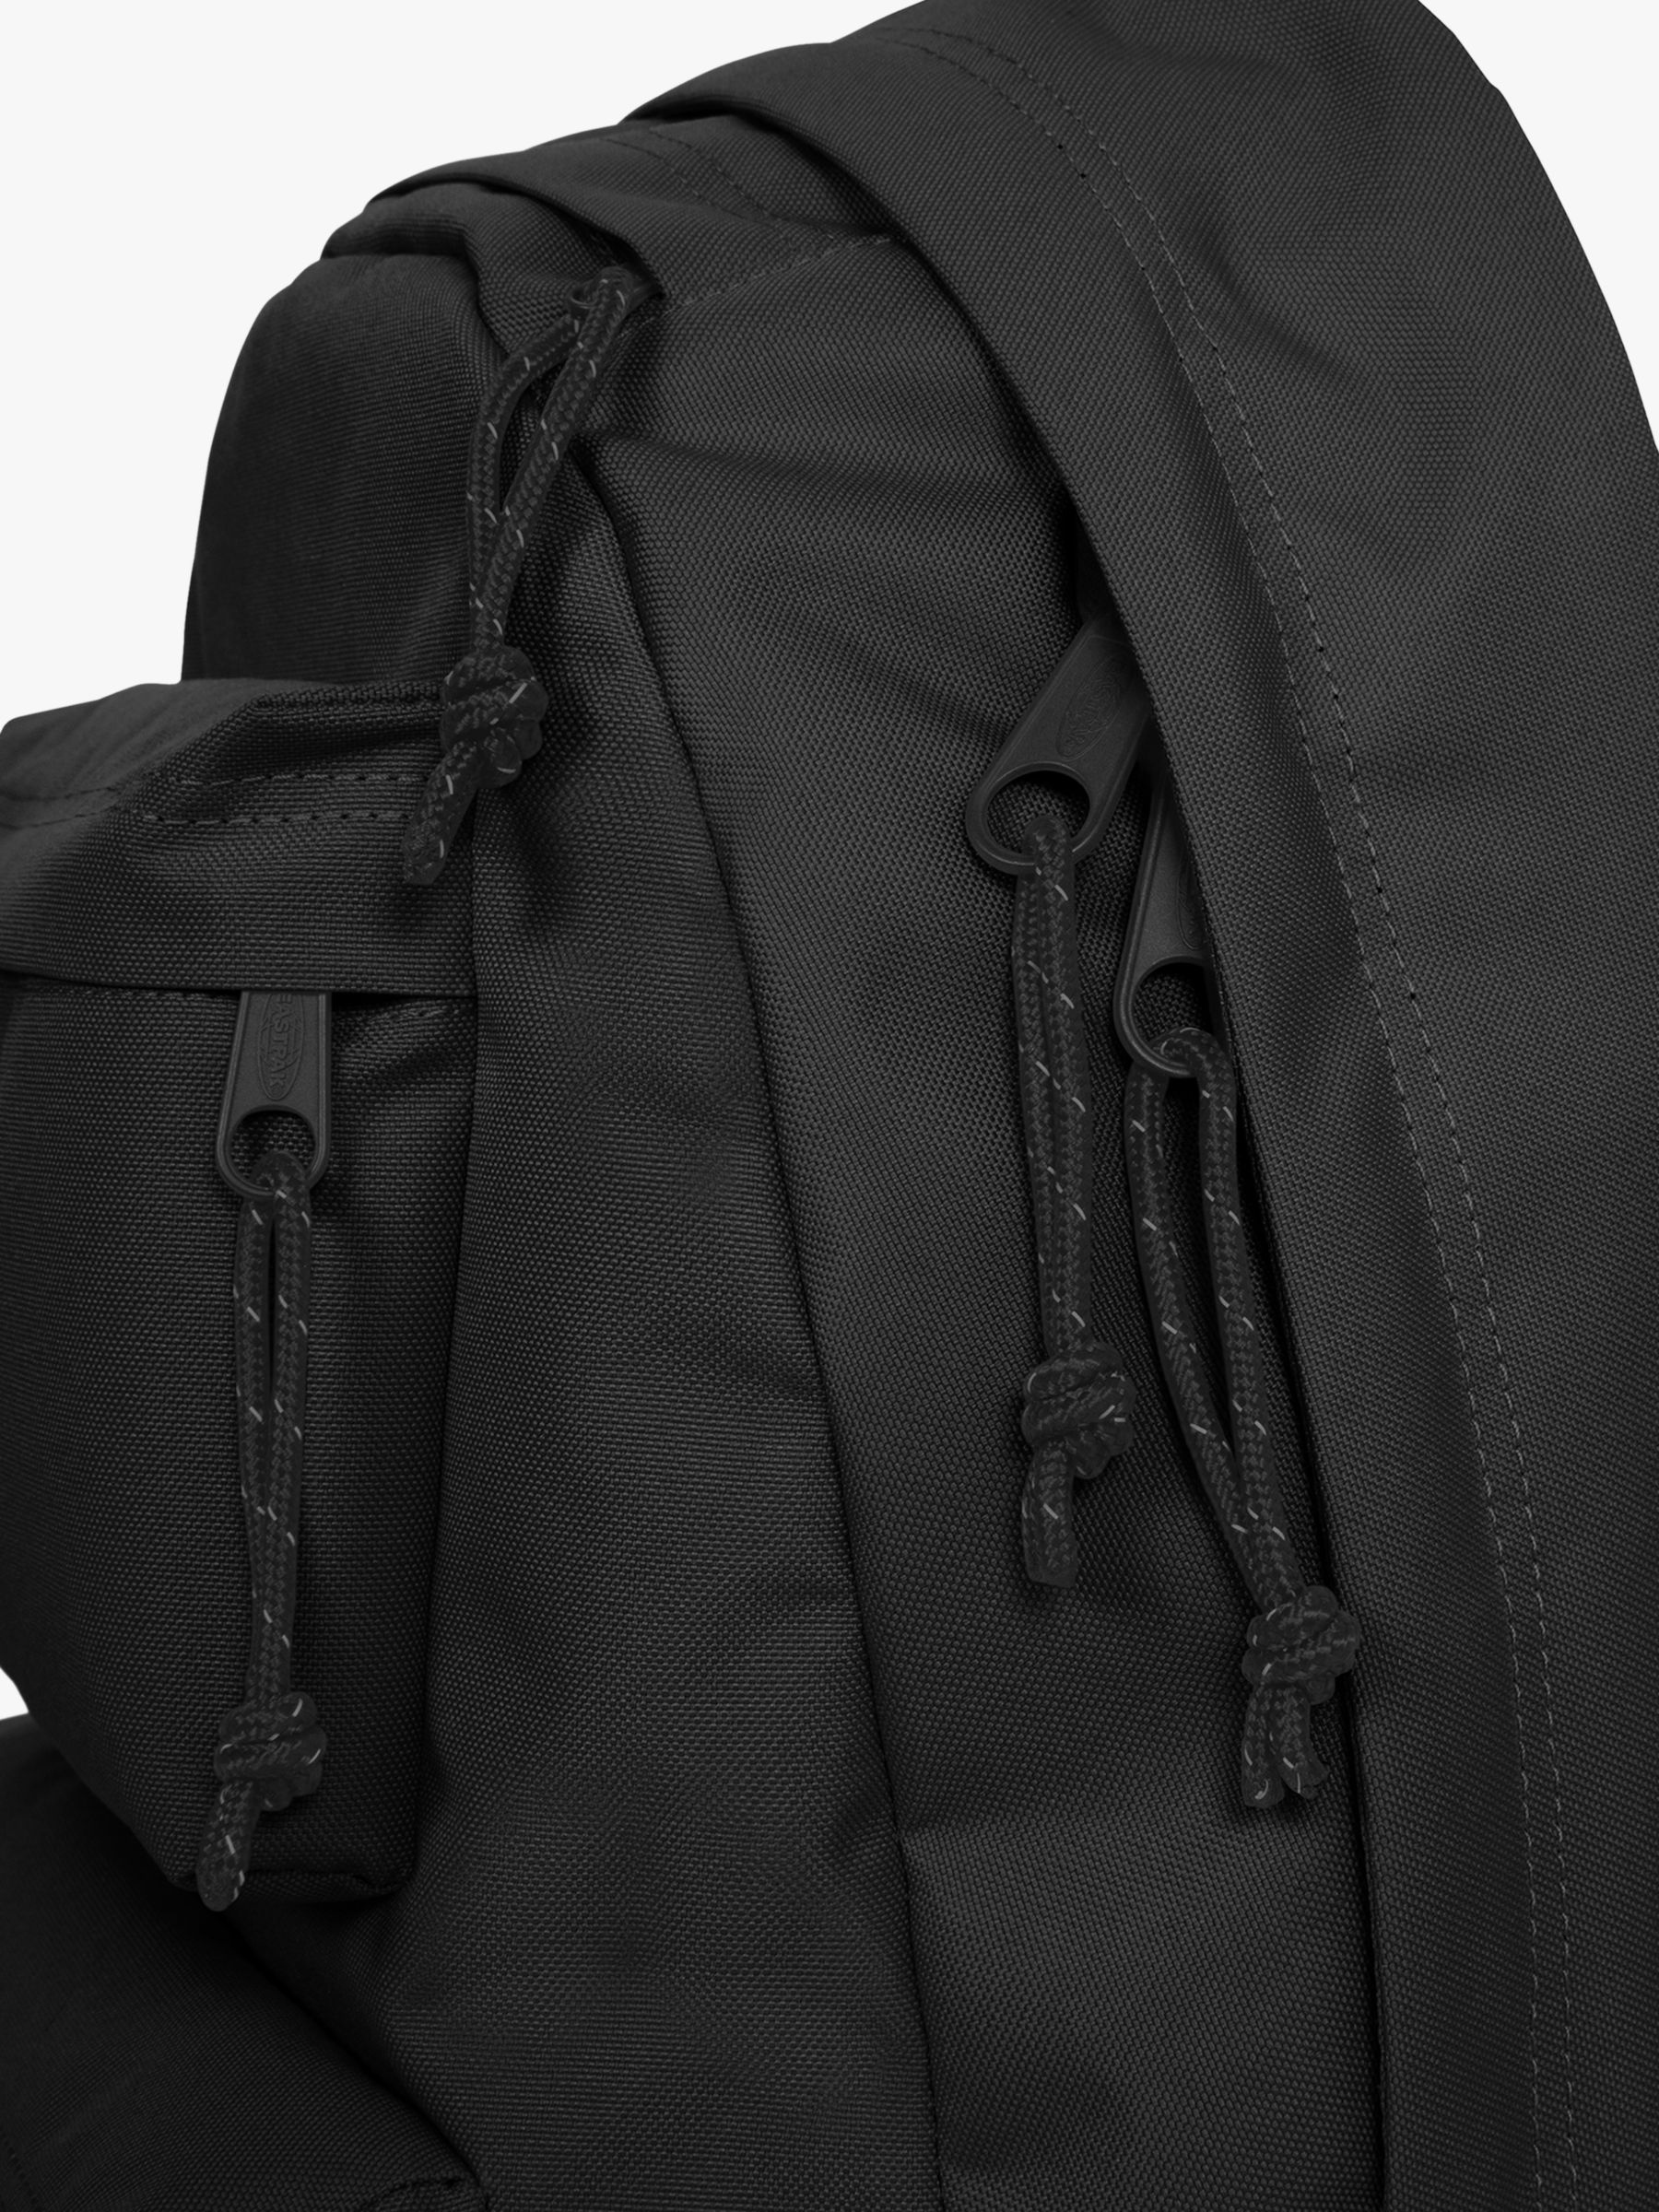 Eastpak Padded Double Backpack, Black at John Lewis & Partners